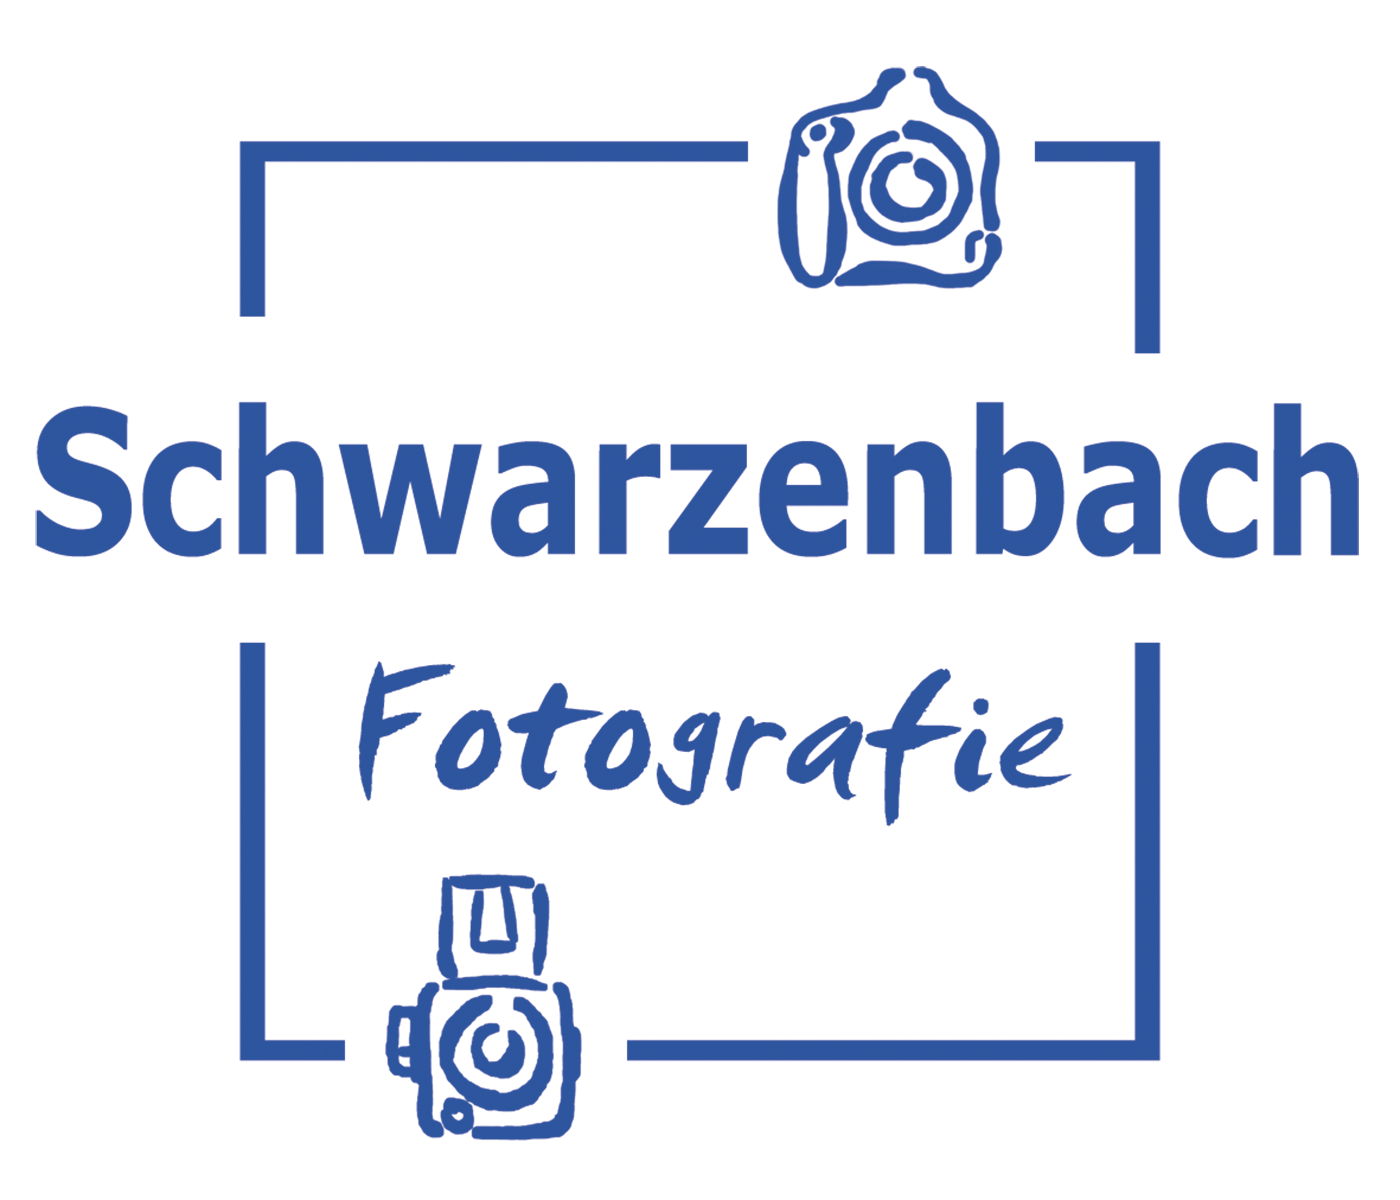 Schwarzenbach Fotografie logo